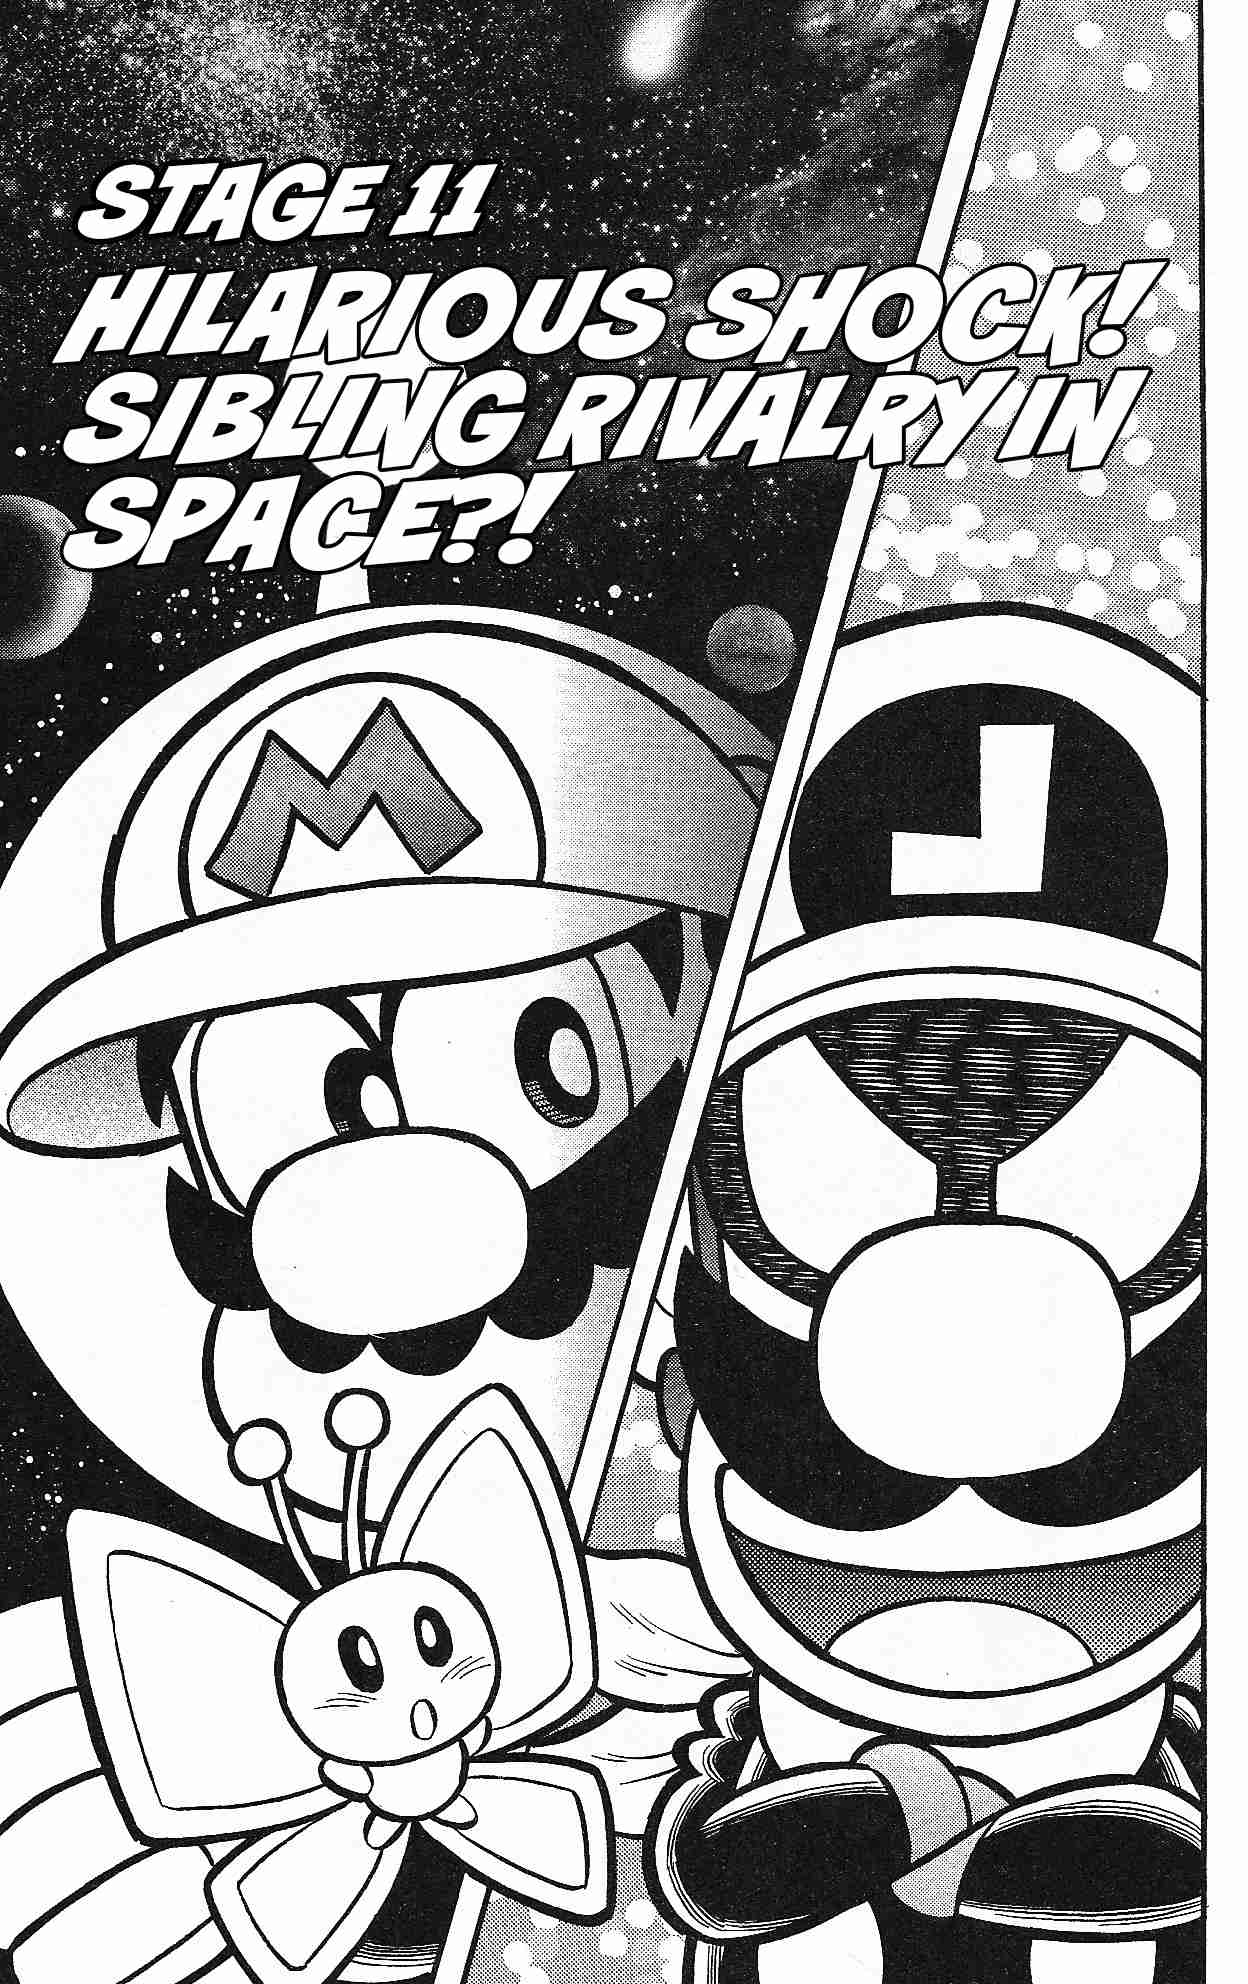 Super Mario kun Vol. 37 Ch. 11 Hilarious Shock! Sibling Rivalry in Space?!